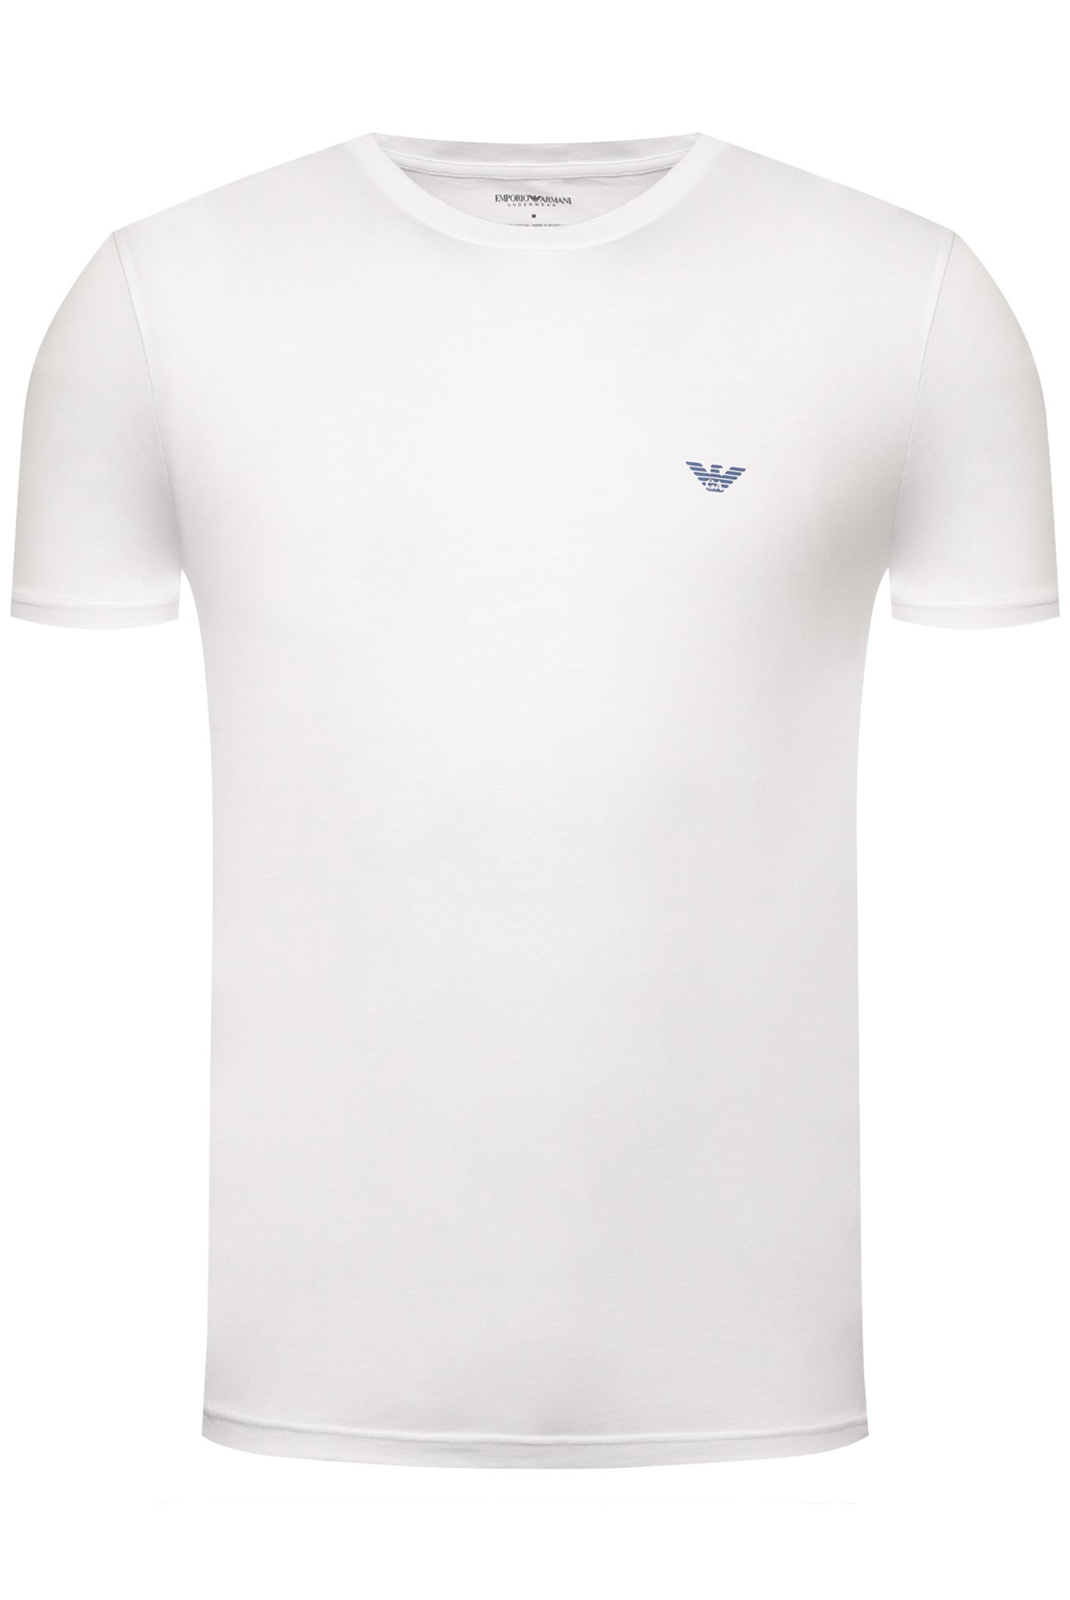 Emporio Armani Tee-shirt Blanc Manches Courtes Col Rond 111019 0p578 